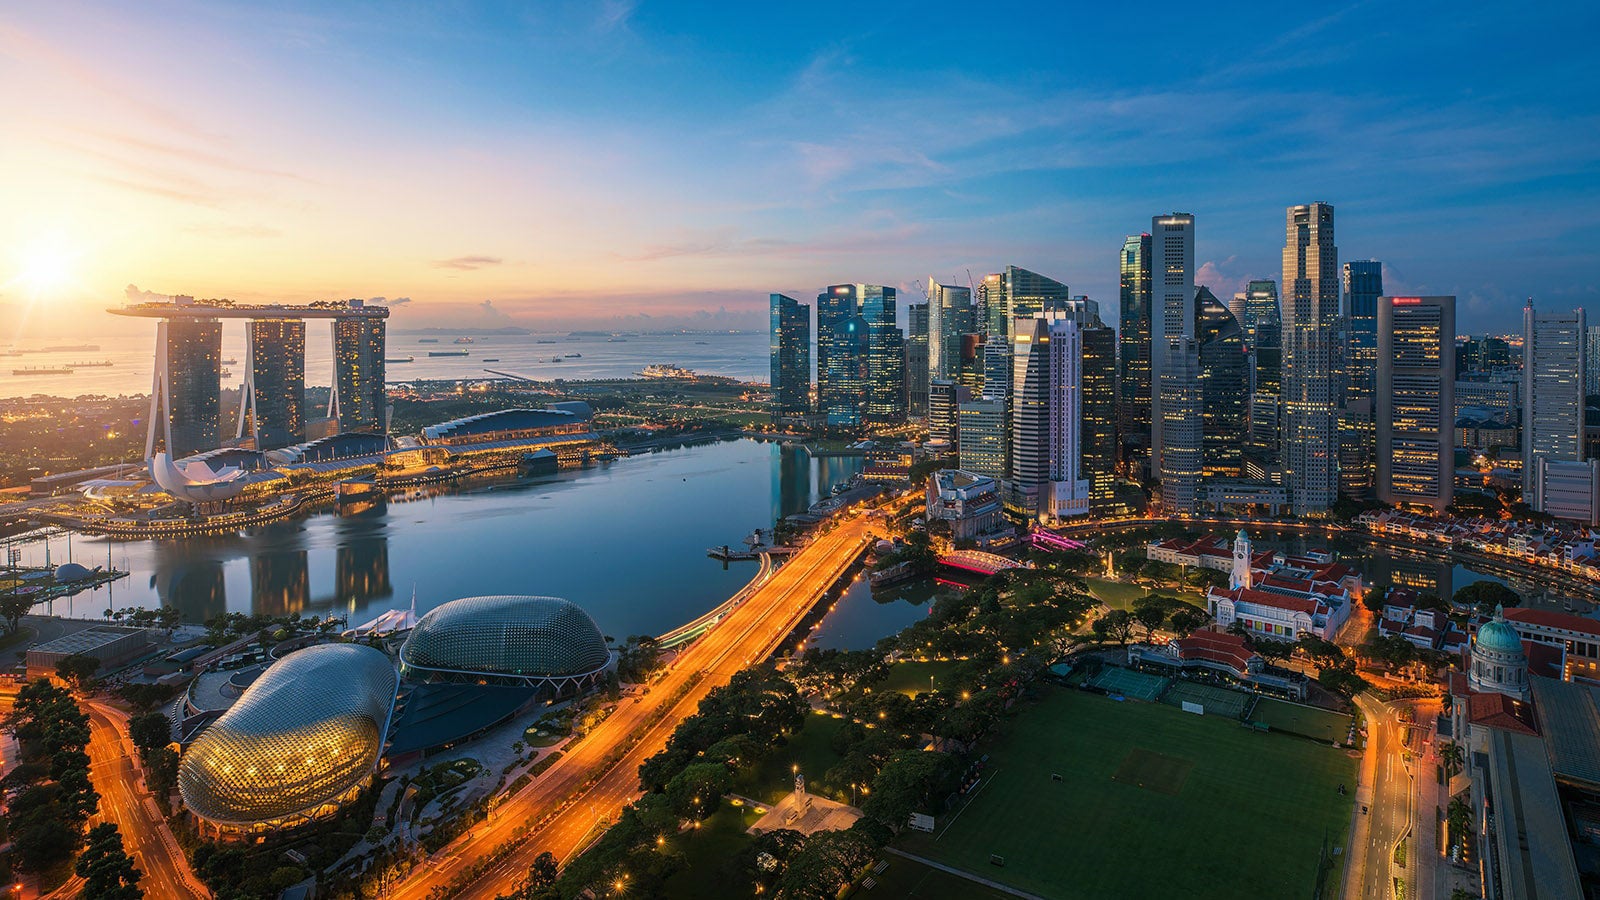 Singapore's city landscape at sunset